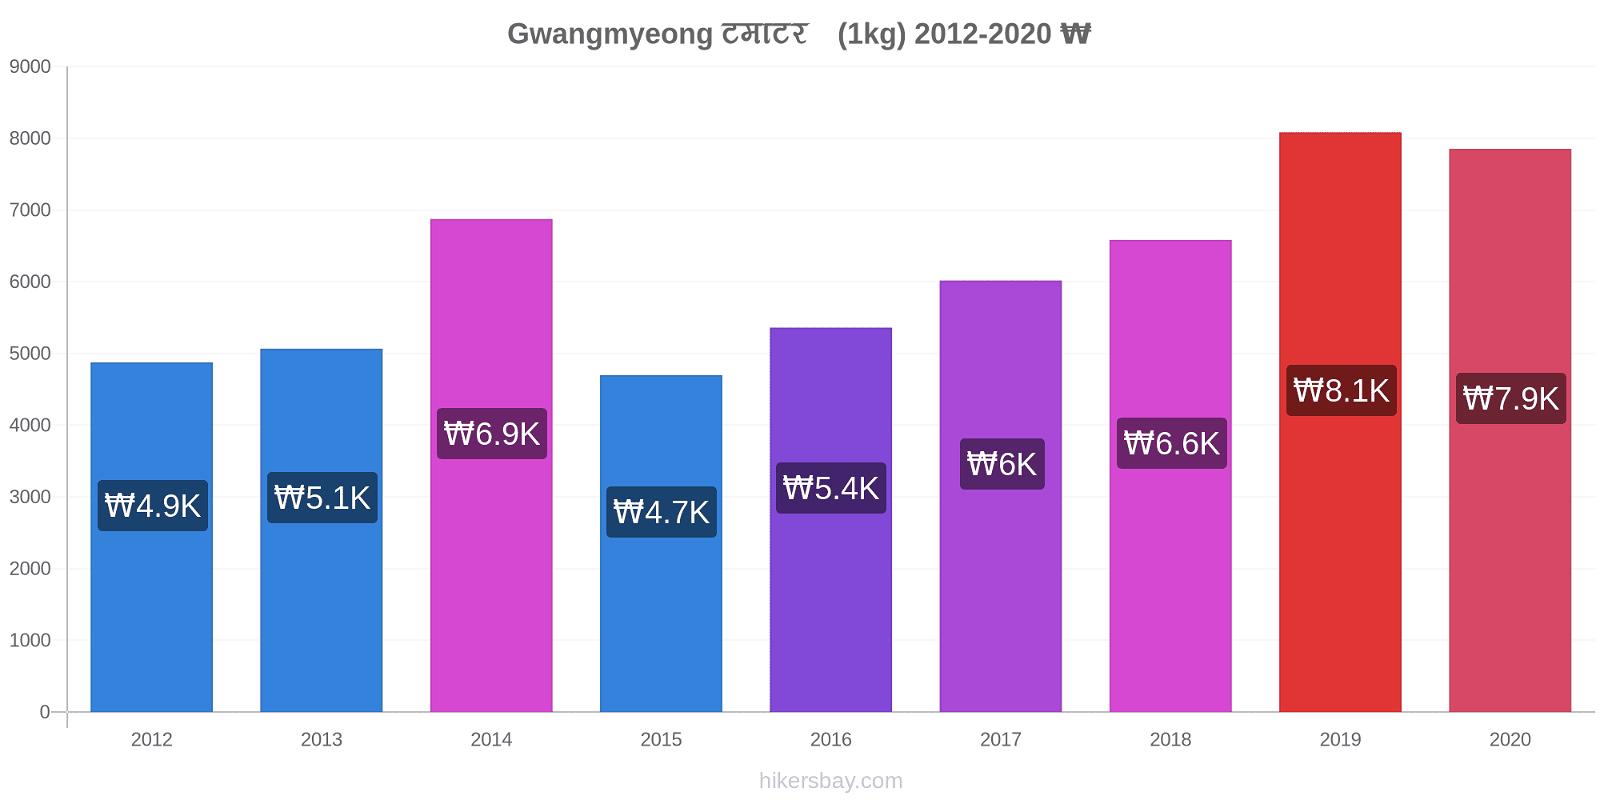 Gwangmyeong मूल्य परिवर्तन टमाटर (1kg) hikersbay.com